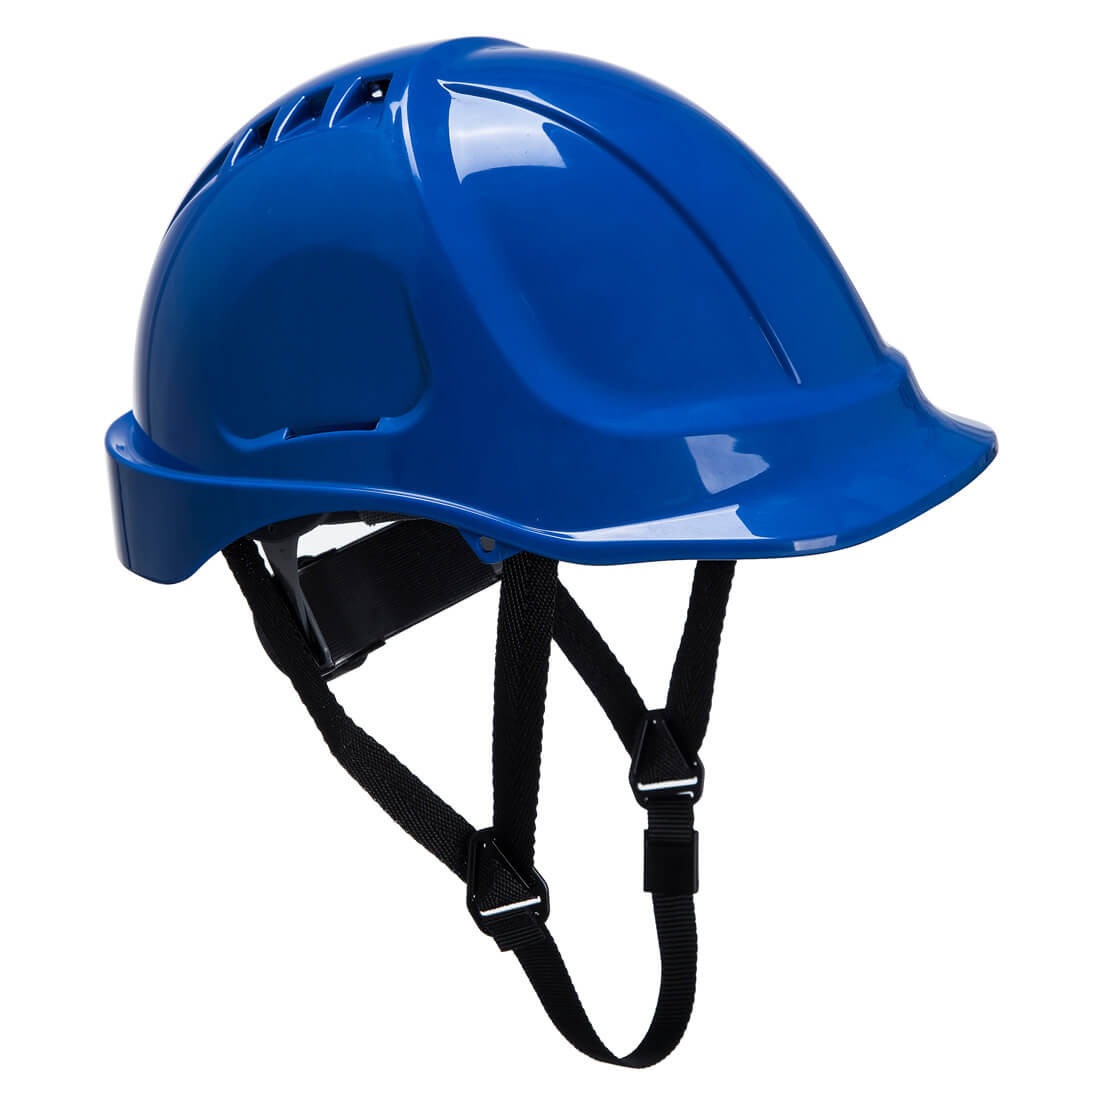 Endurace Helmet - Personal protection